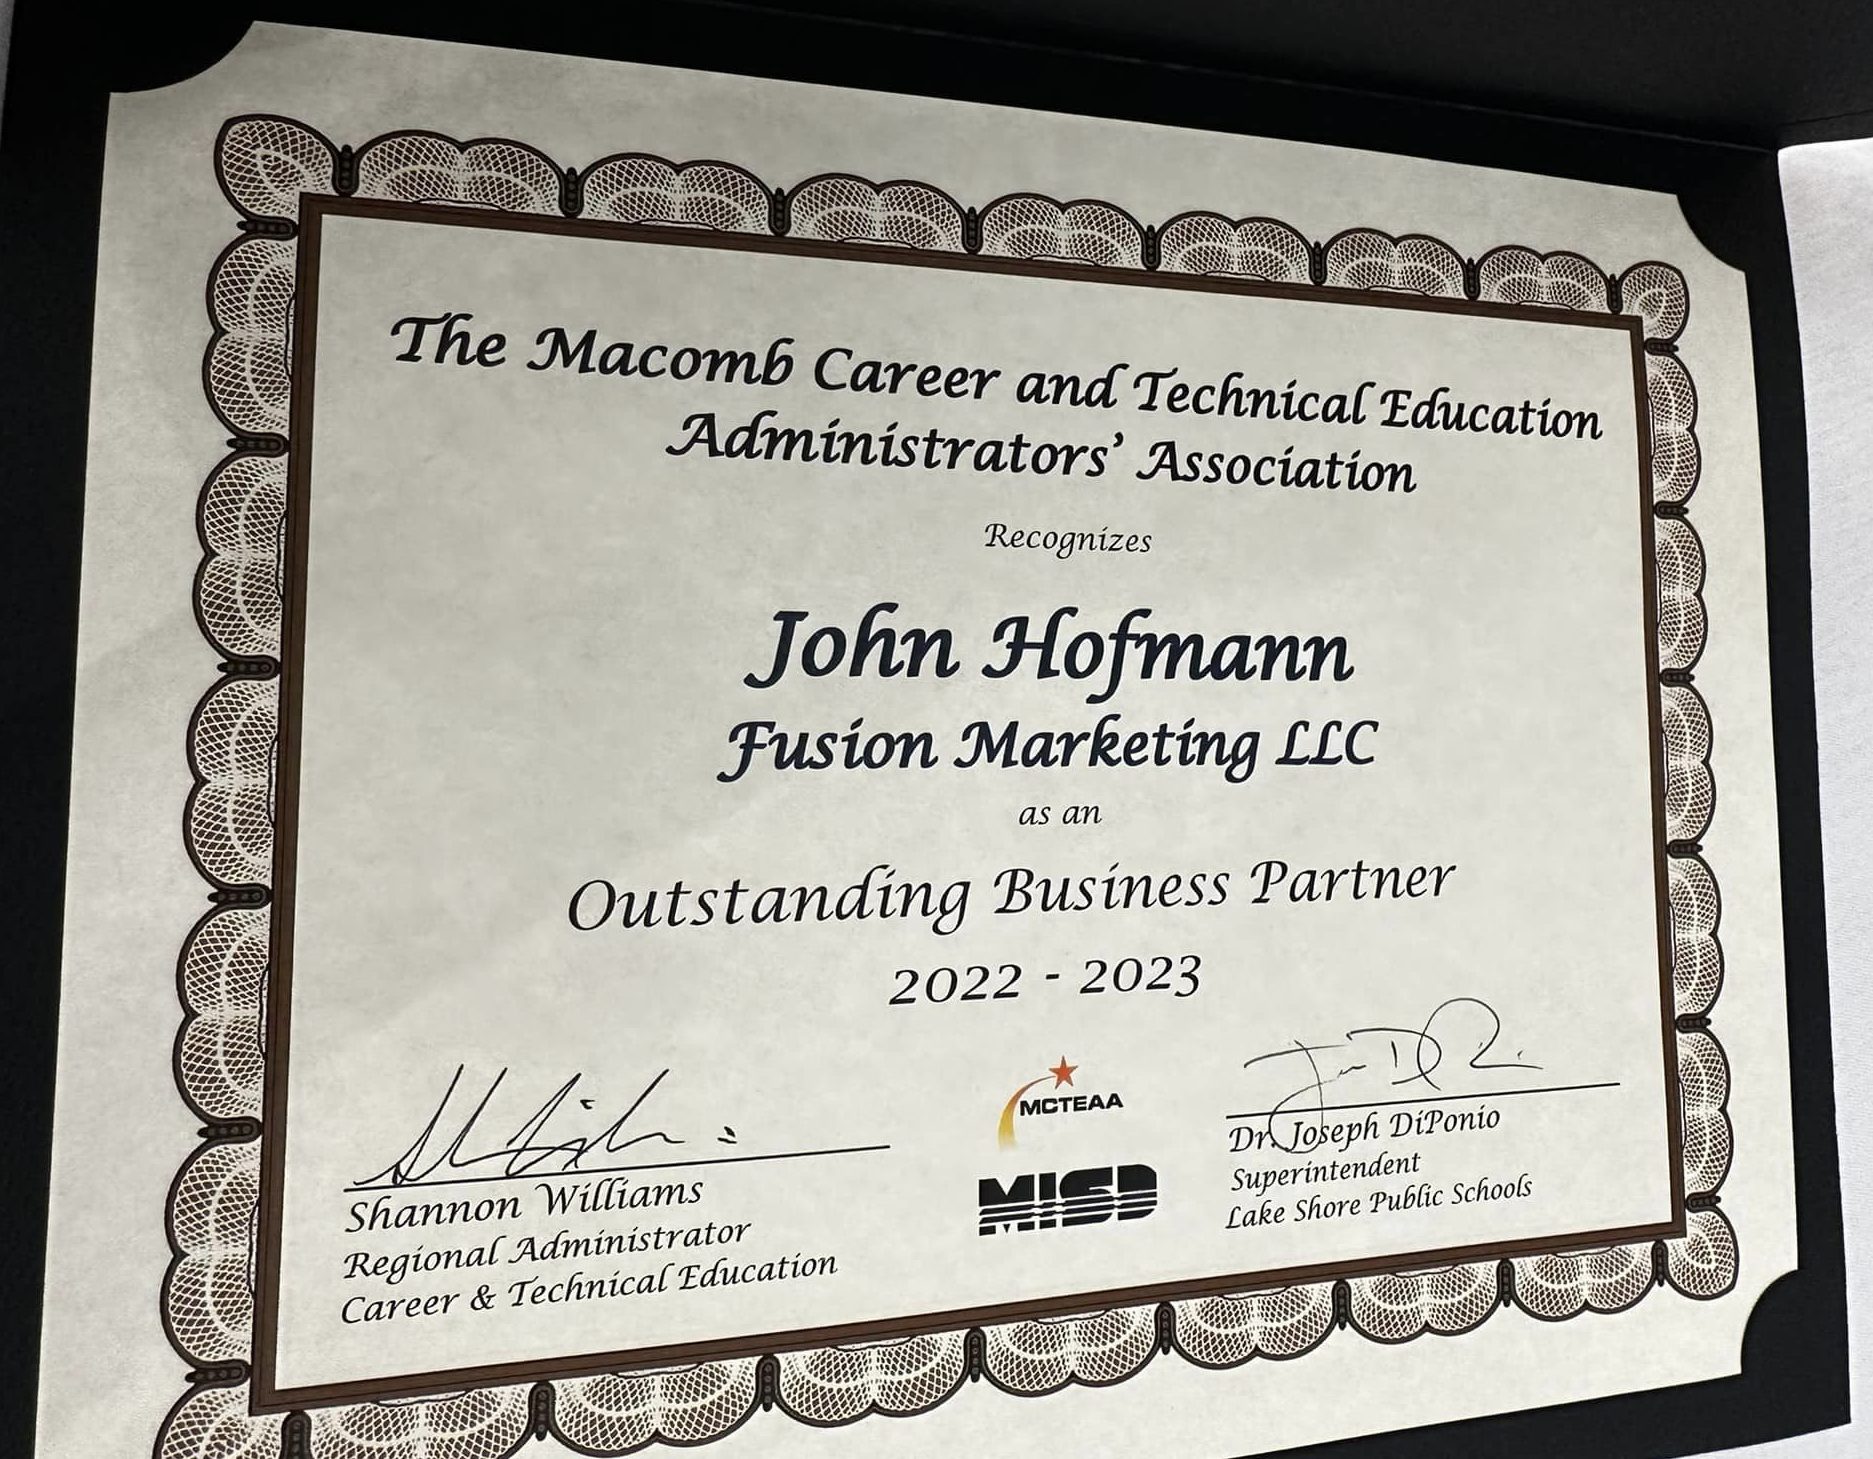 Fusion Marketing Fusion Marketings John Hofmann Honored with MCTEAA 2023 Business Partner Award Certificate